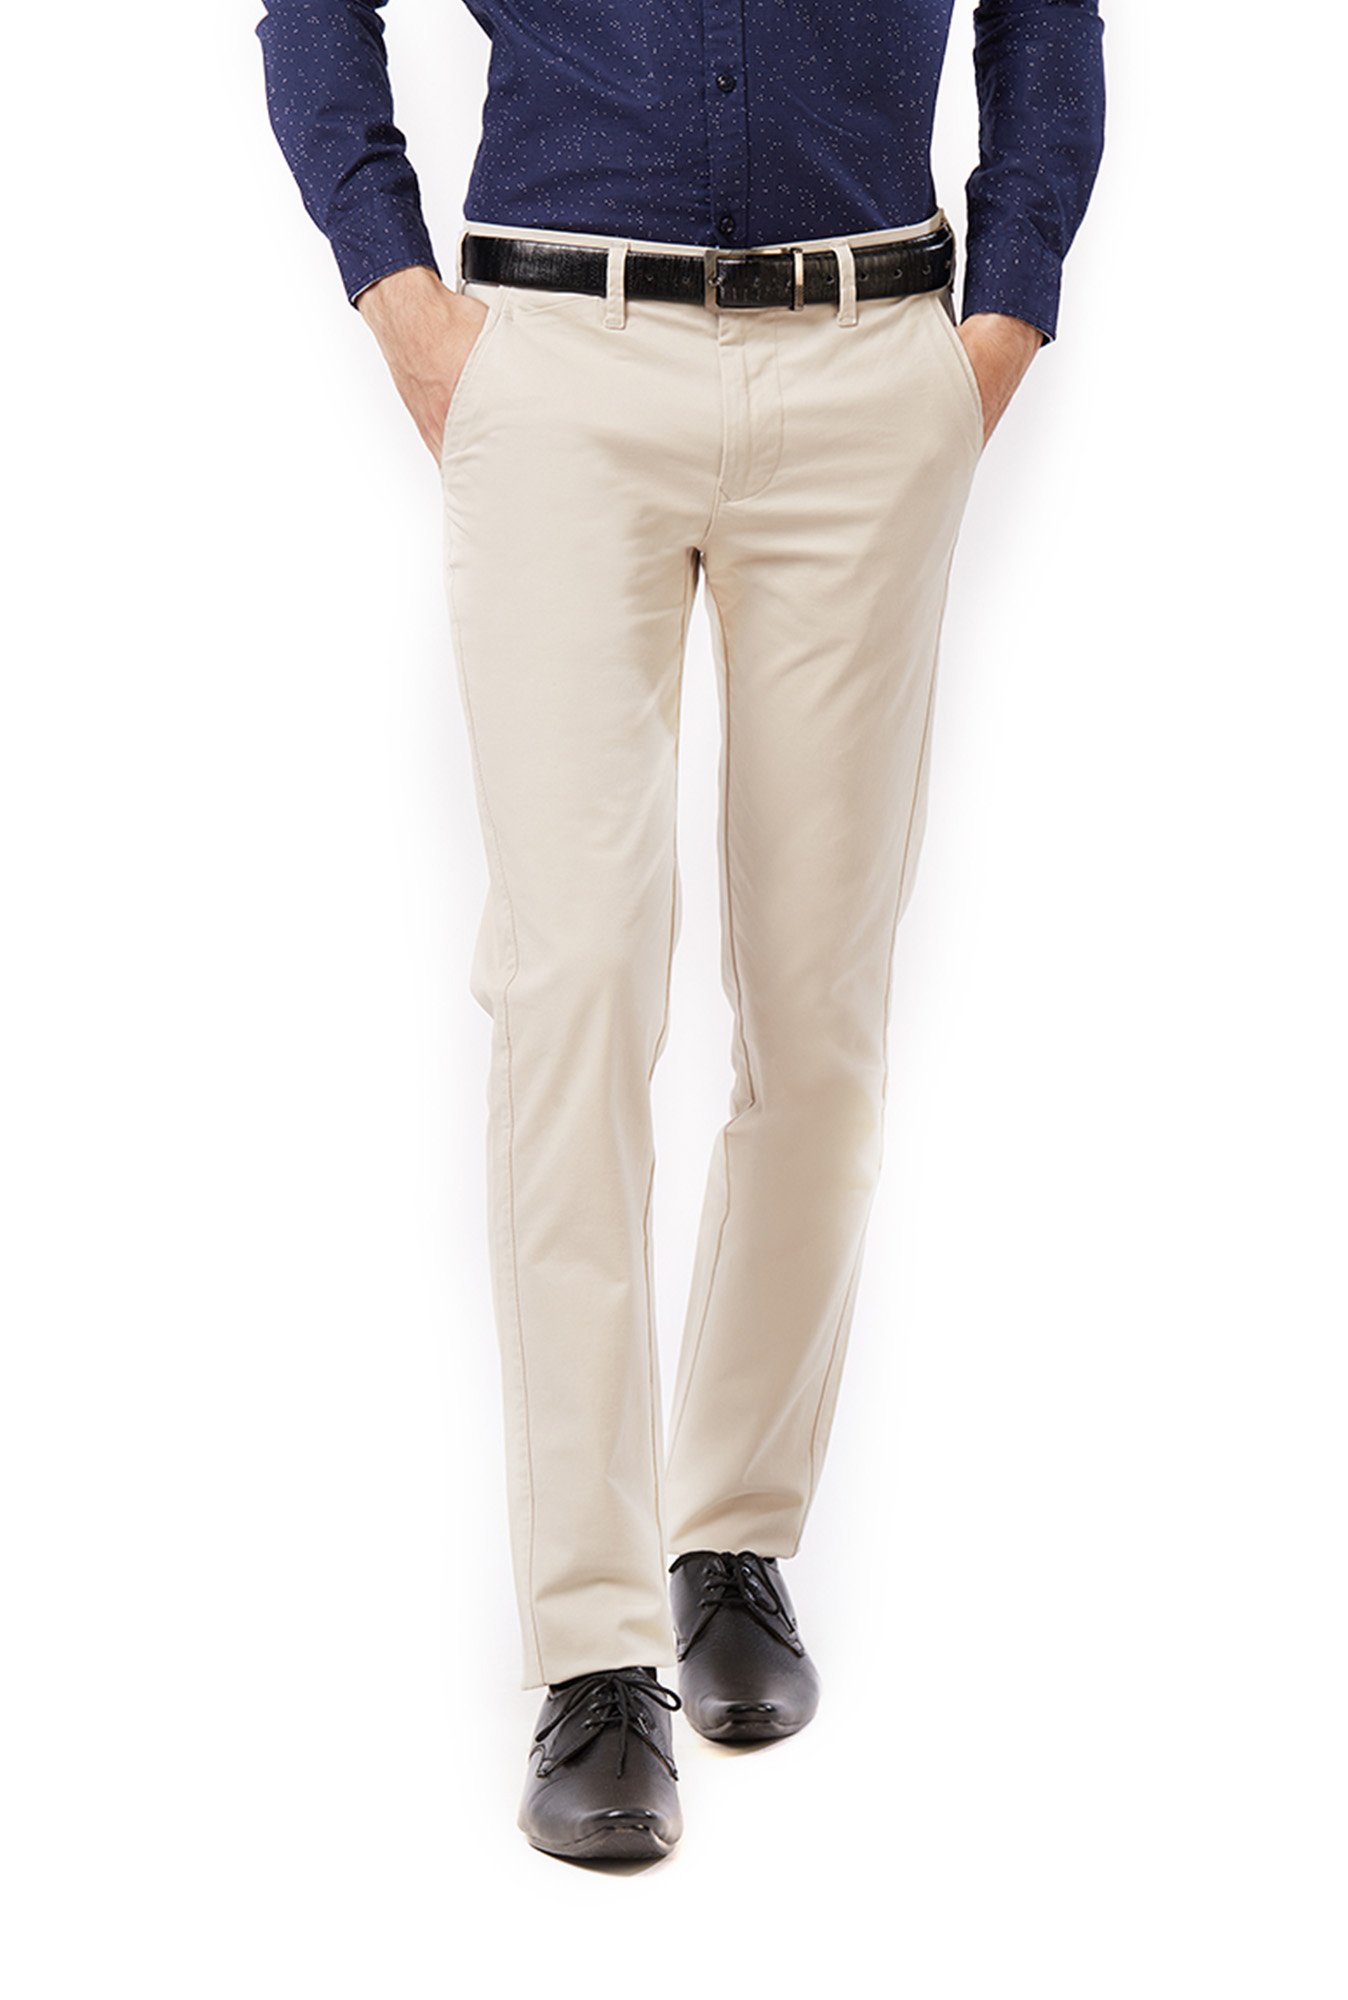 Buy Ruggers Dark Beige Slim Fit Cotton Trousers for Men Online  Tata CLiQ